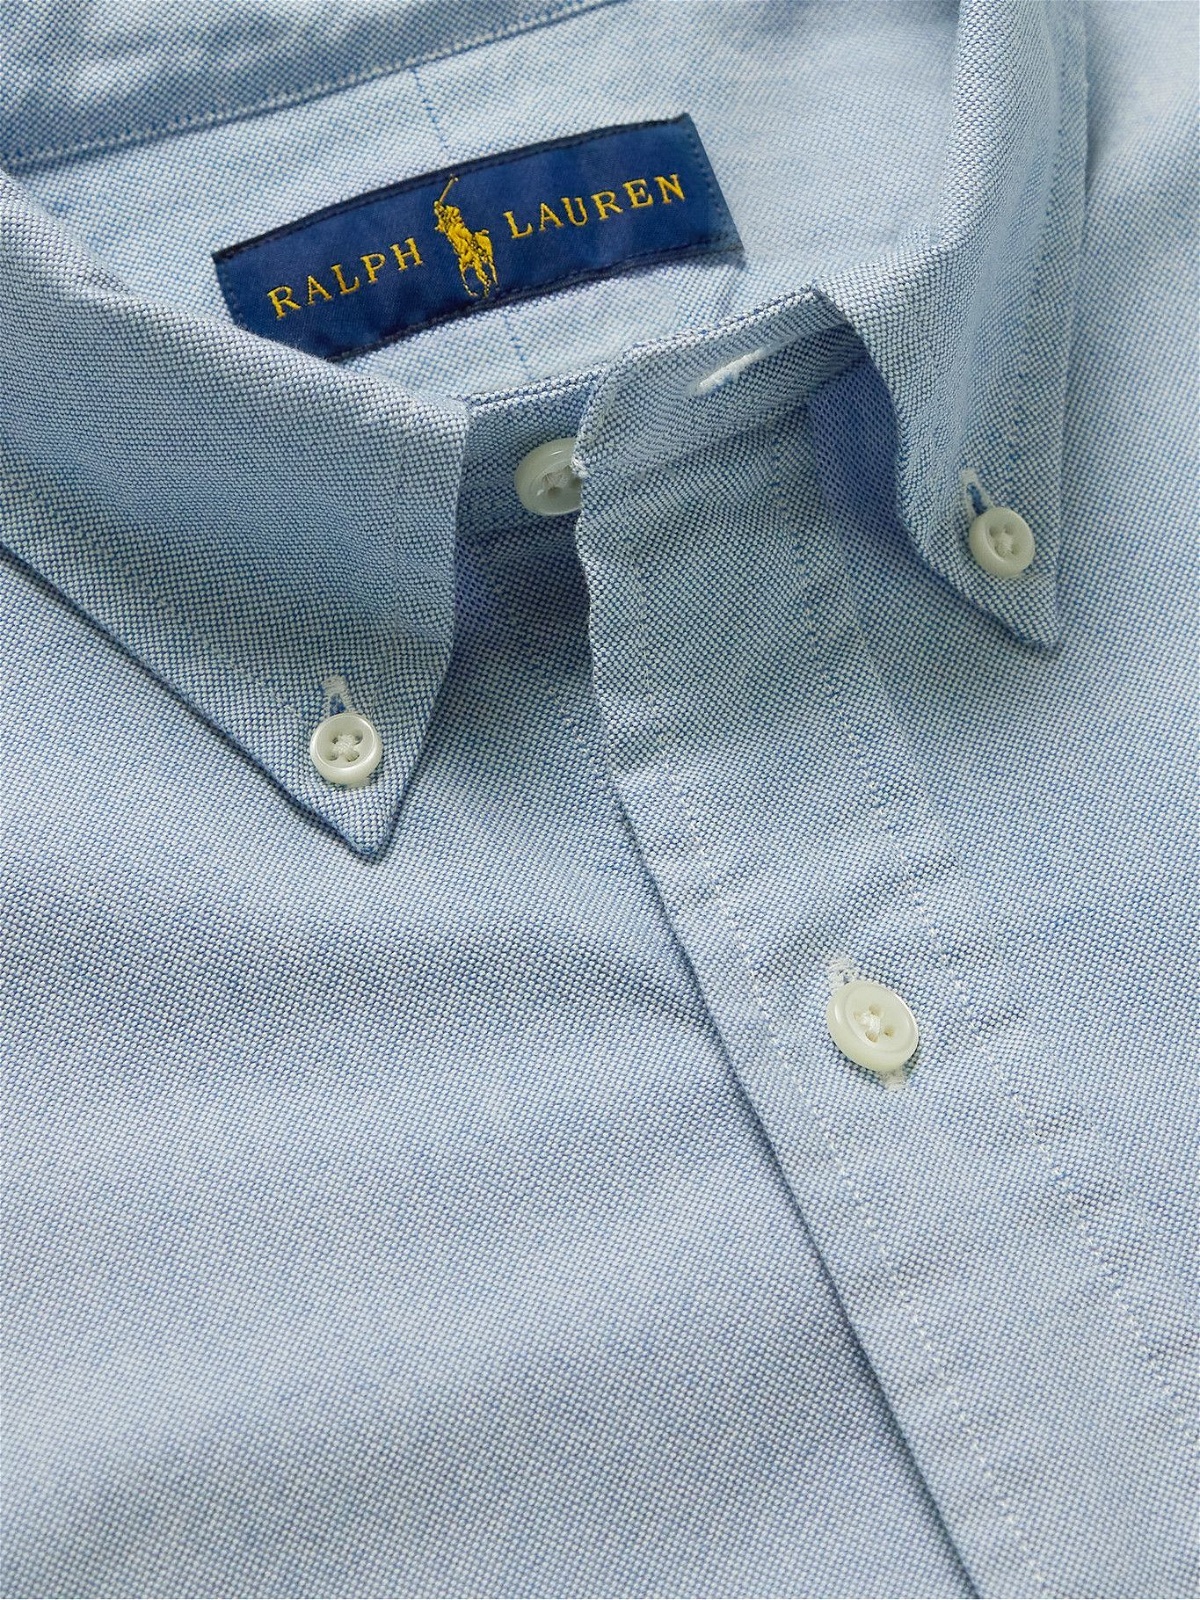 Shirt with buttons on the collar brand POLO RALPH LAUREN —  /en